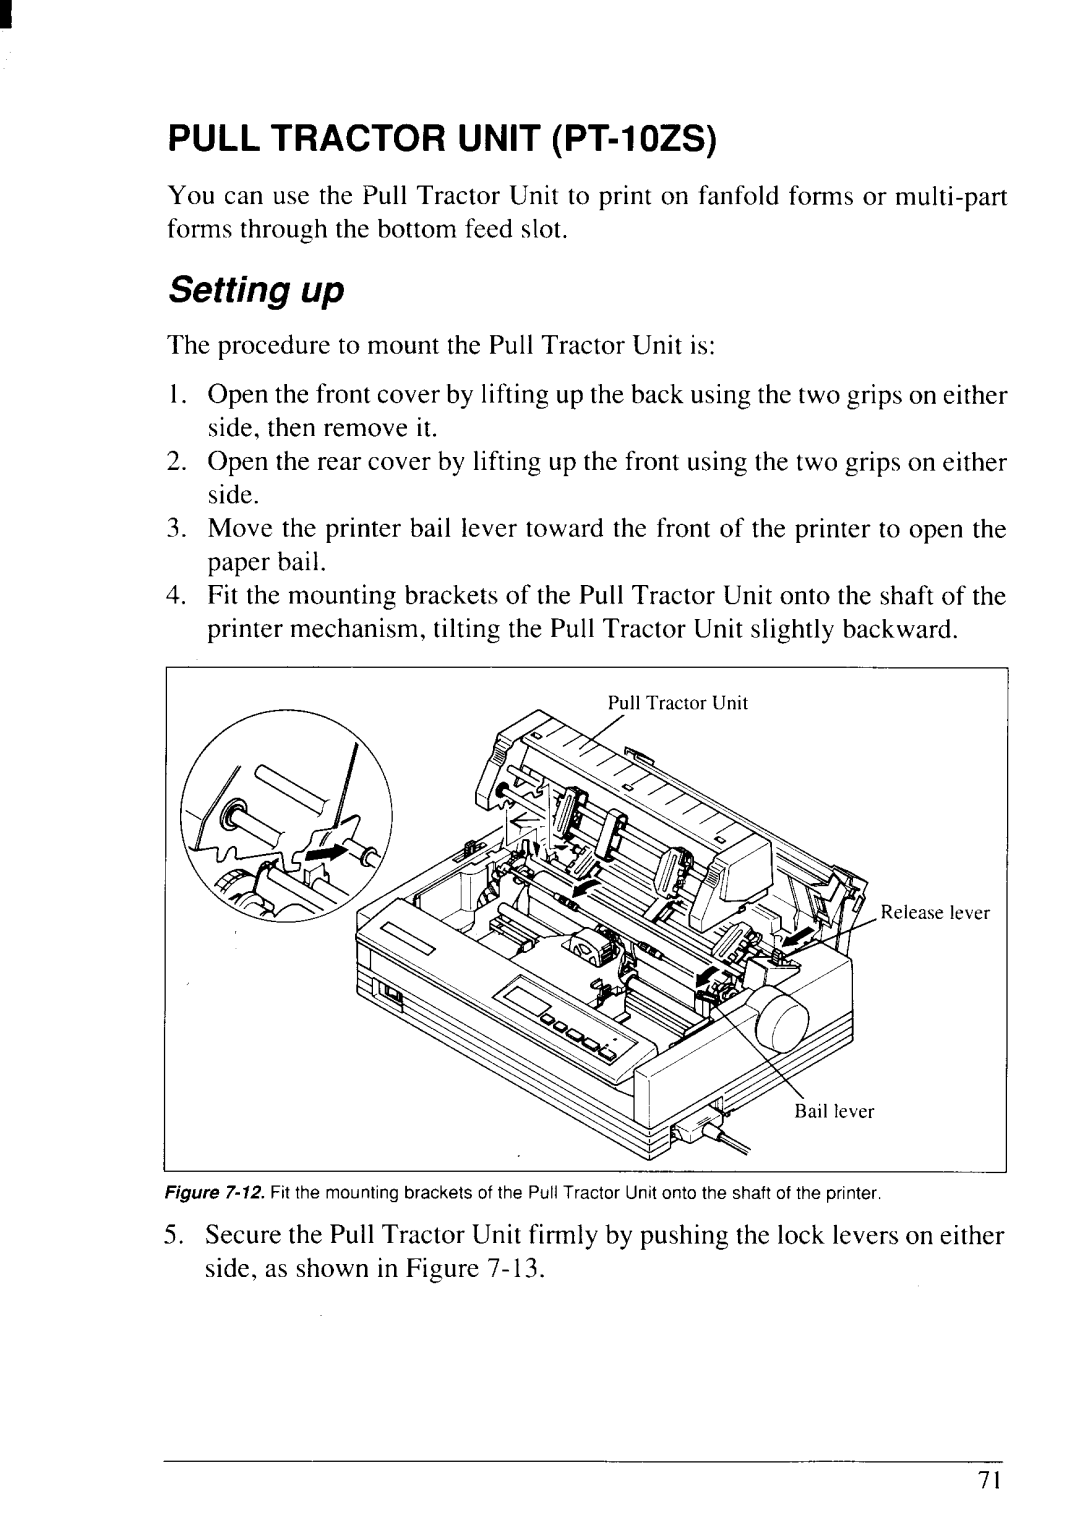 Star Micronics NX-2430 manual Pull Tractor Unit Pt-Iozs, Setting up 